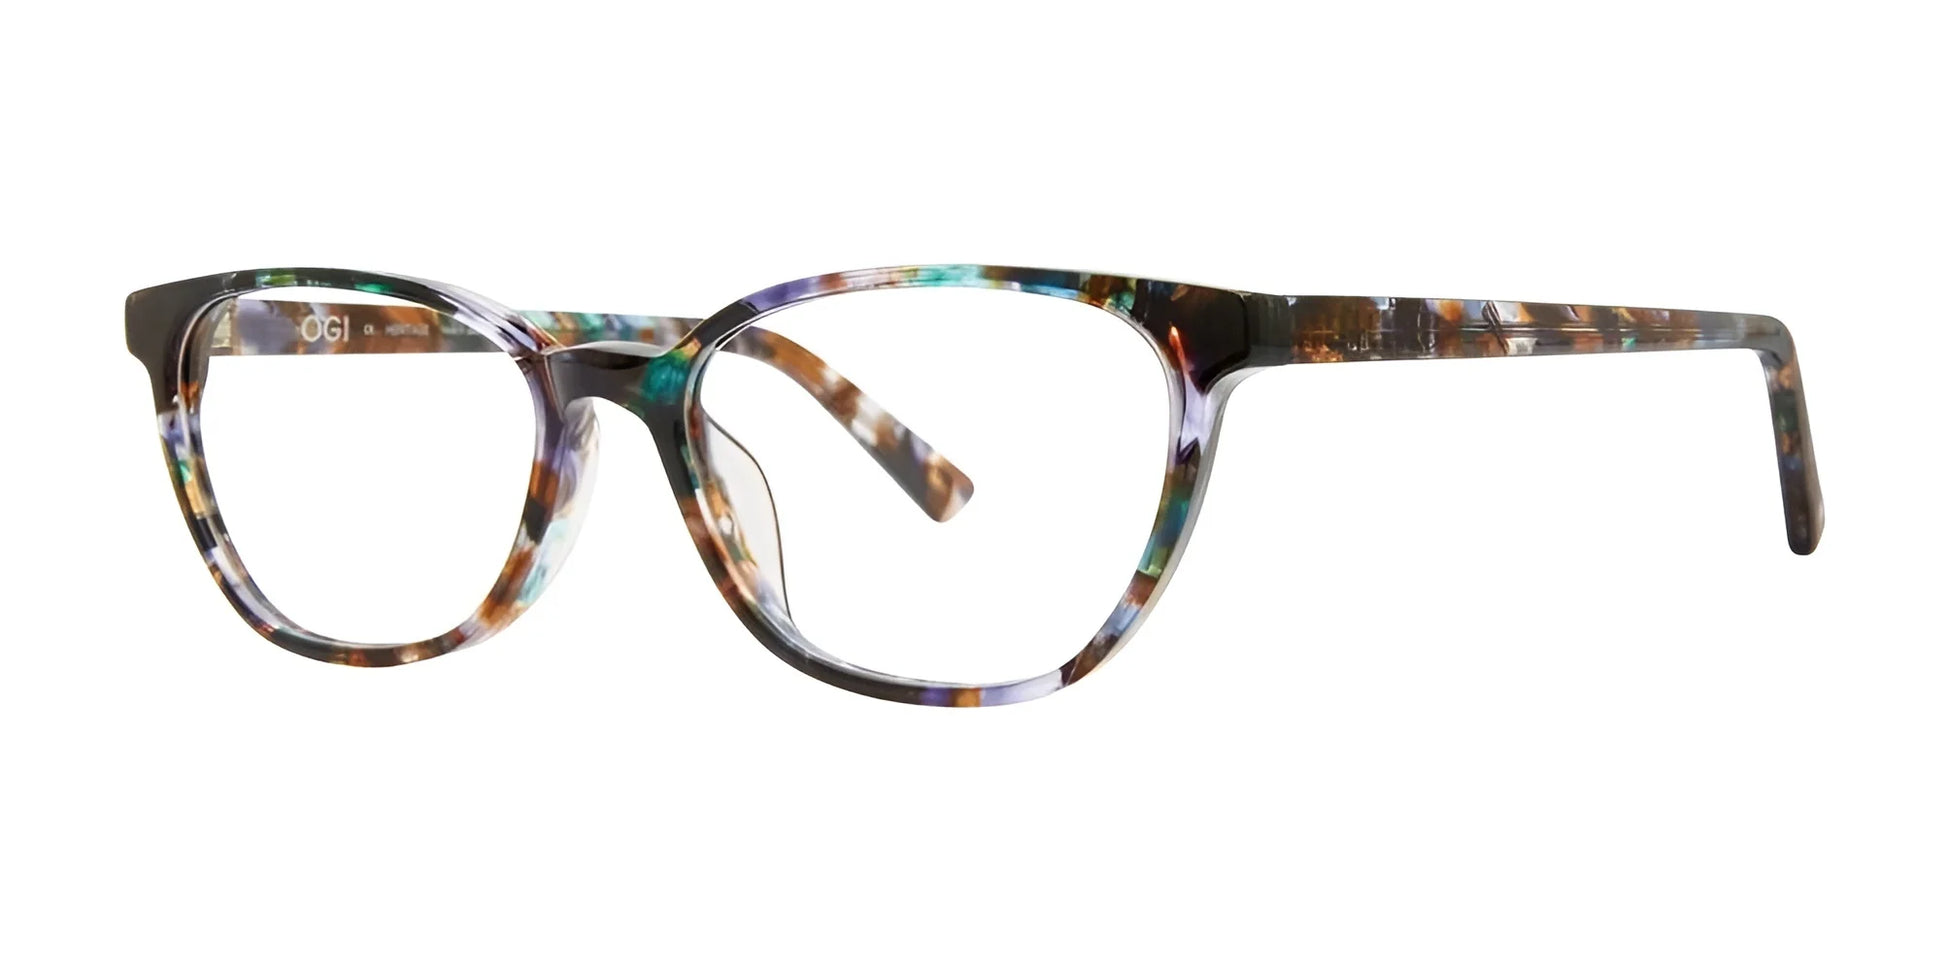 OGI 7173 Eyeglasses Multi Colored Tortoise